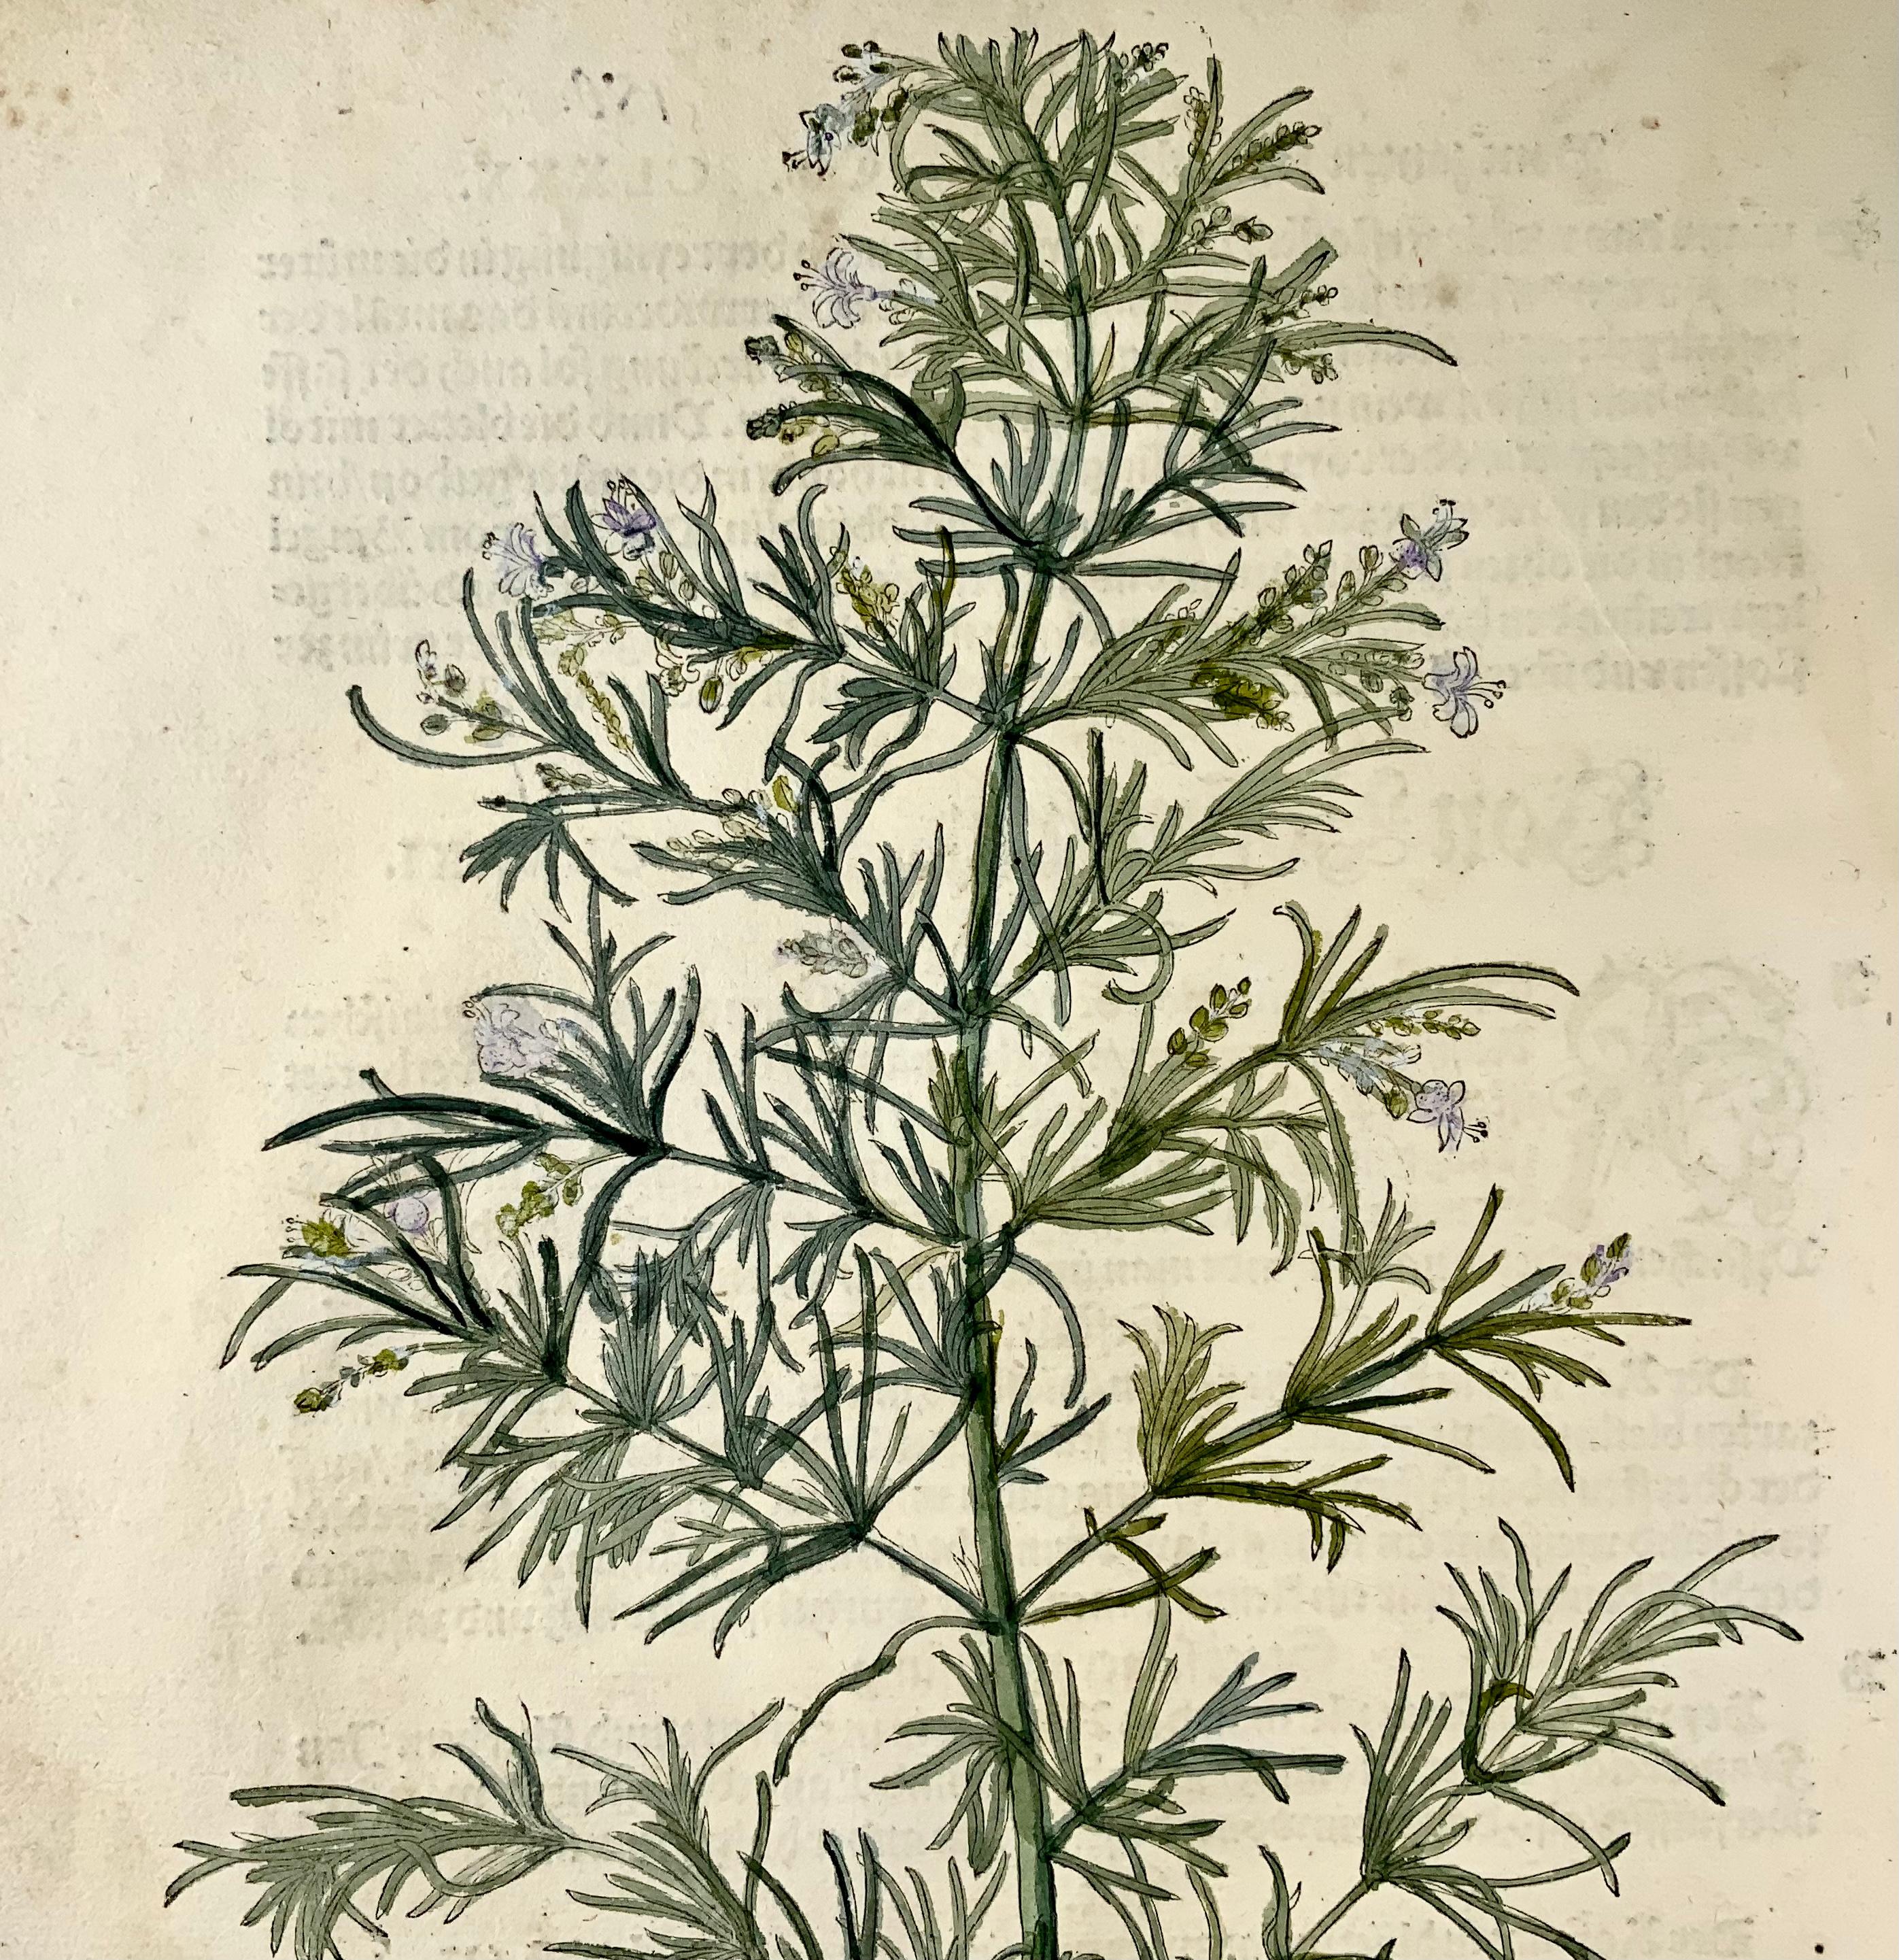 Renaissance 1543 Leonhart Fuchs; Rosemary, Folio herb from the scarce first edition